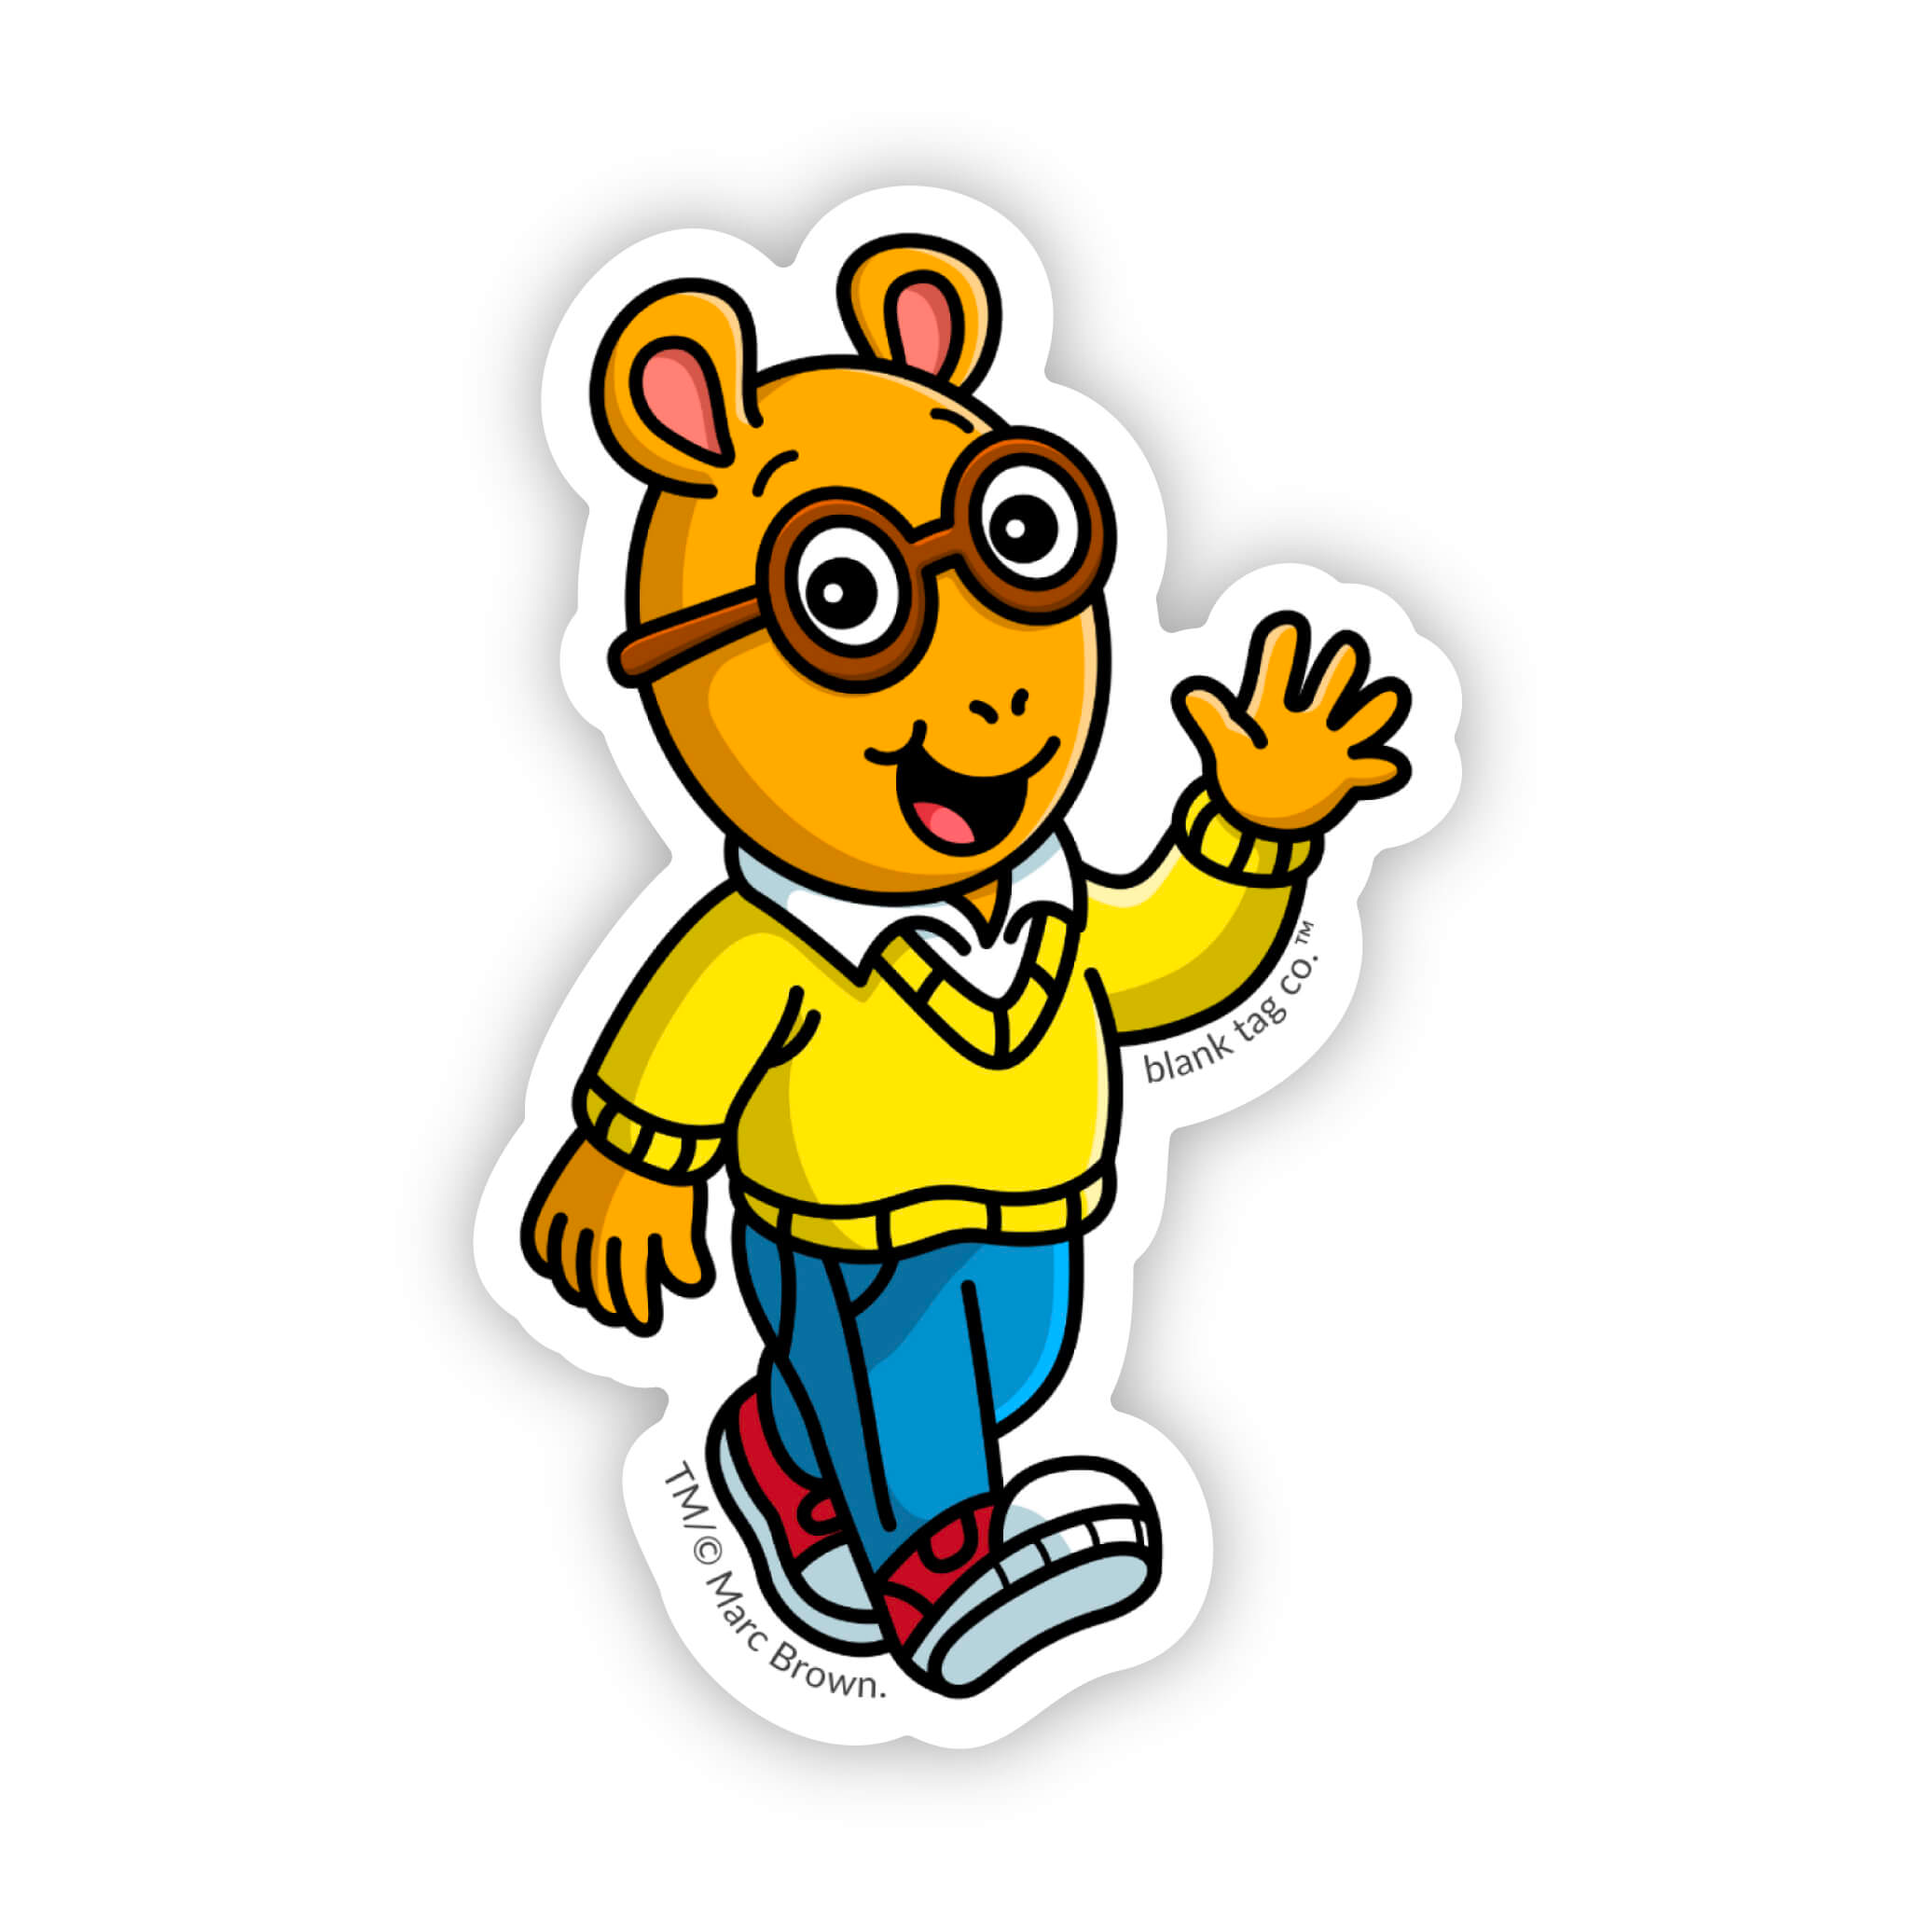 The Arthur Sticker